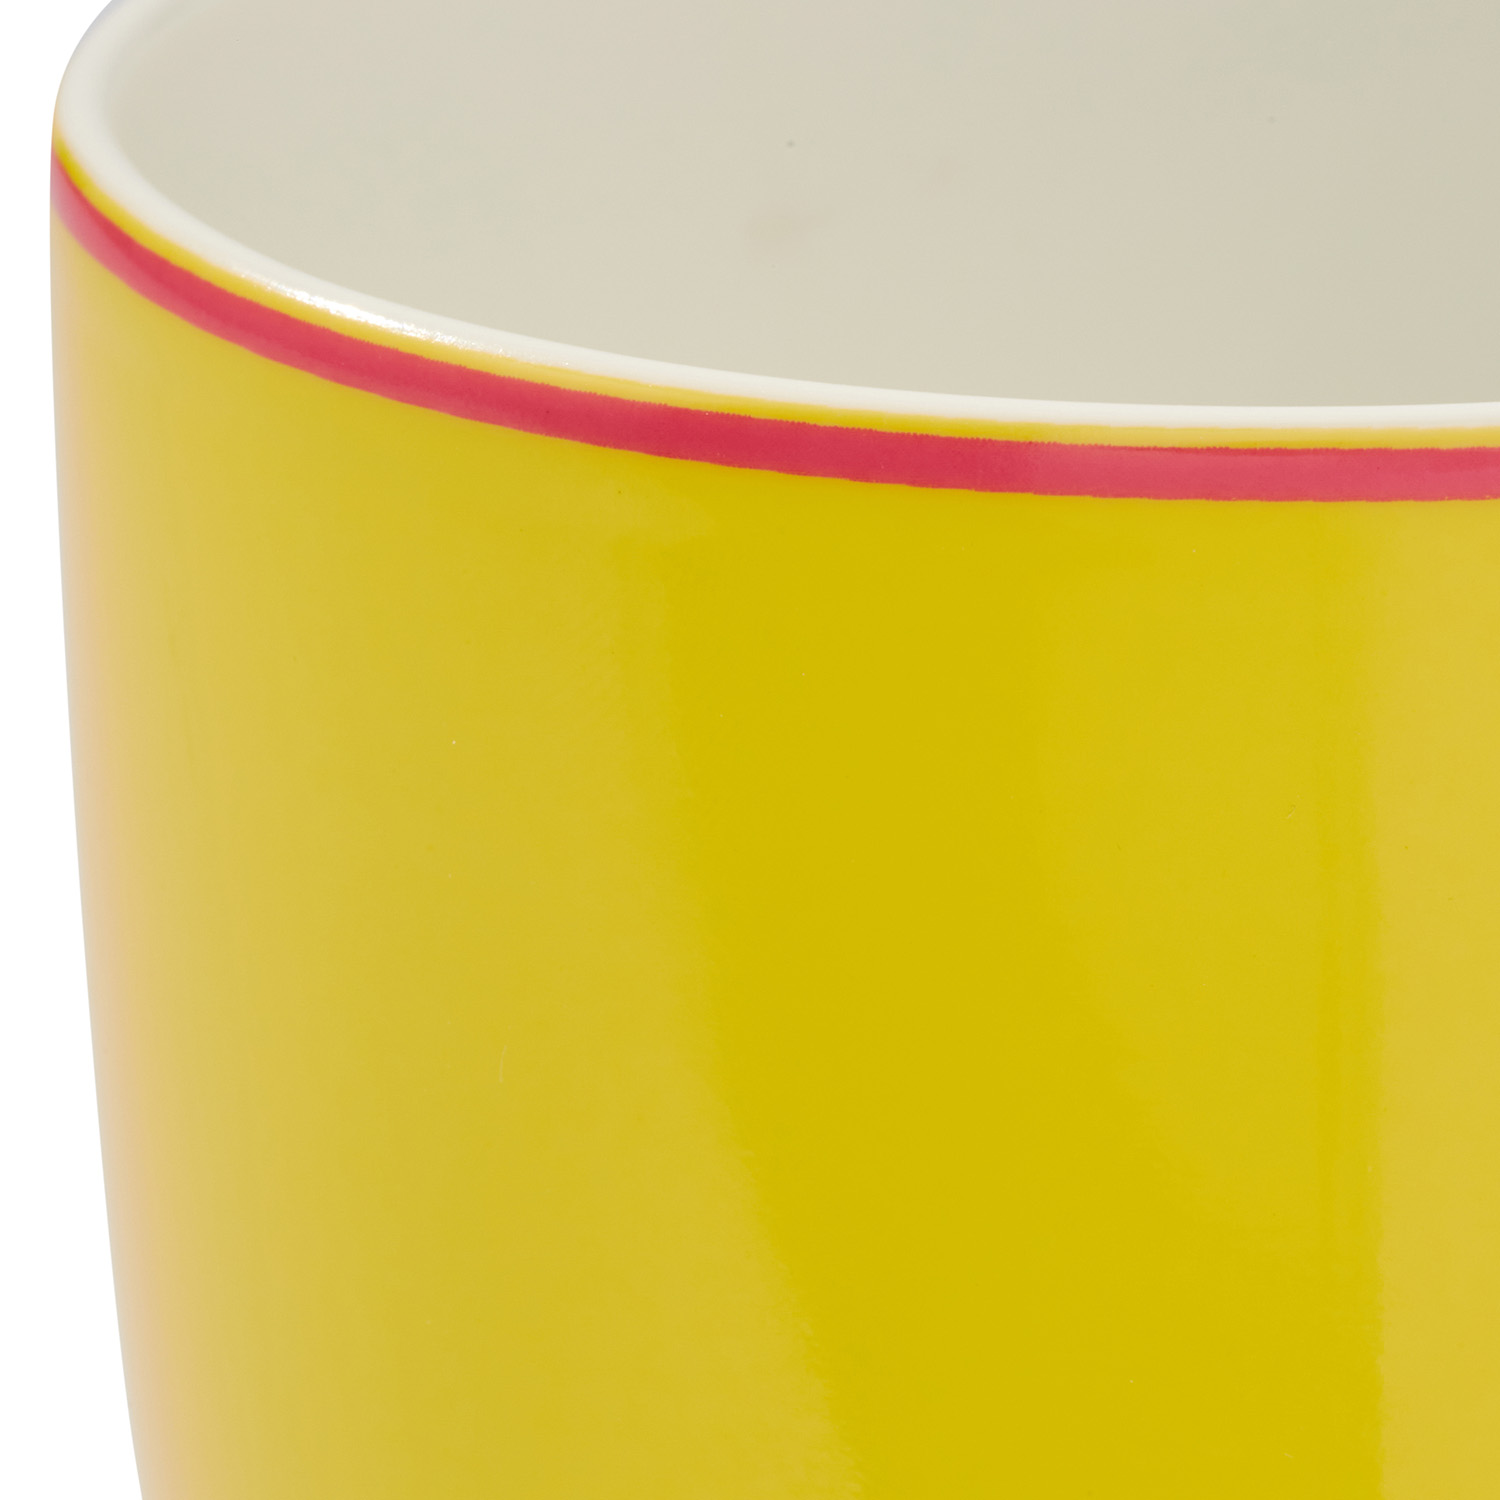 Calypso Yellow Mug image number null